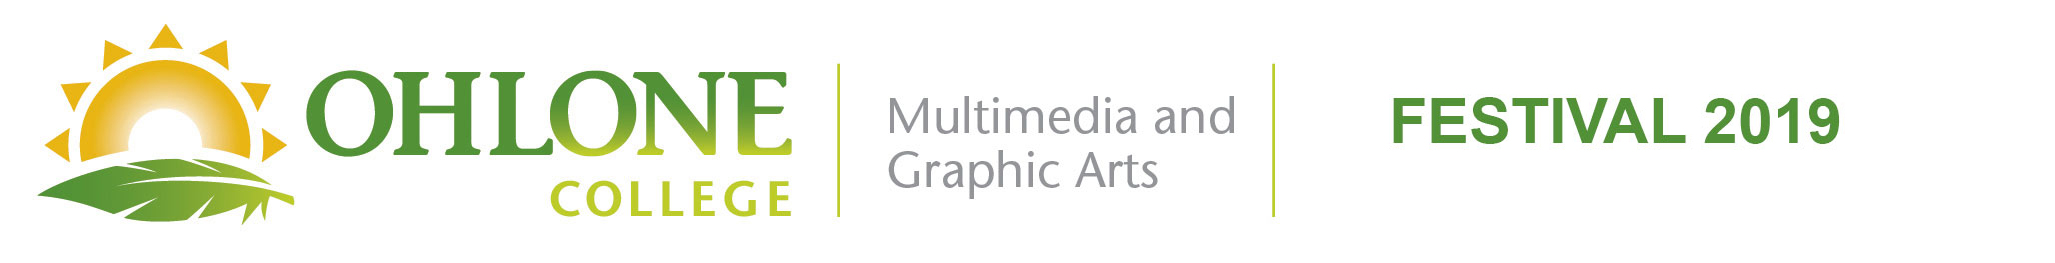 Multimedia and Graphic Arts Festival Logo